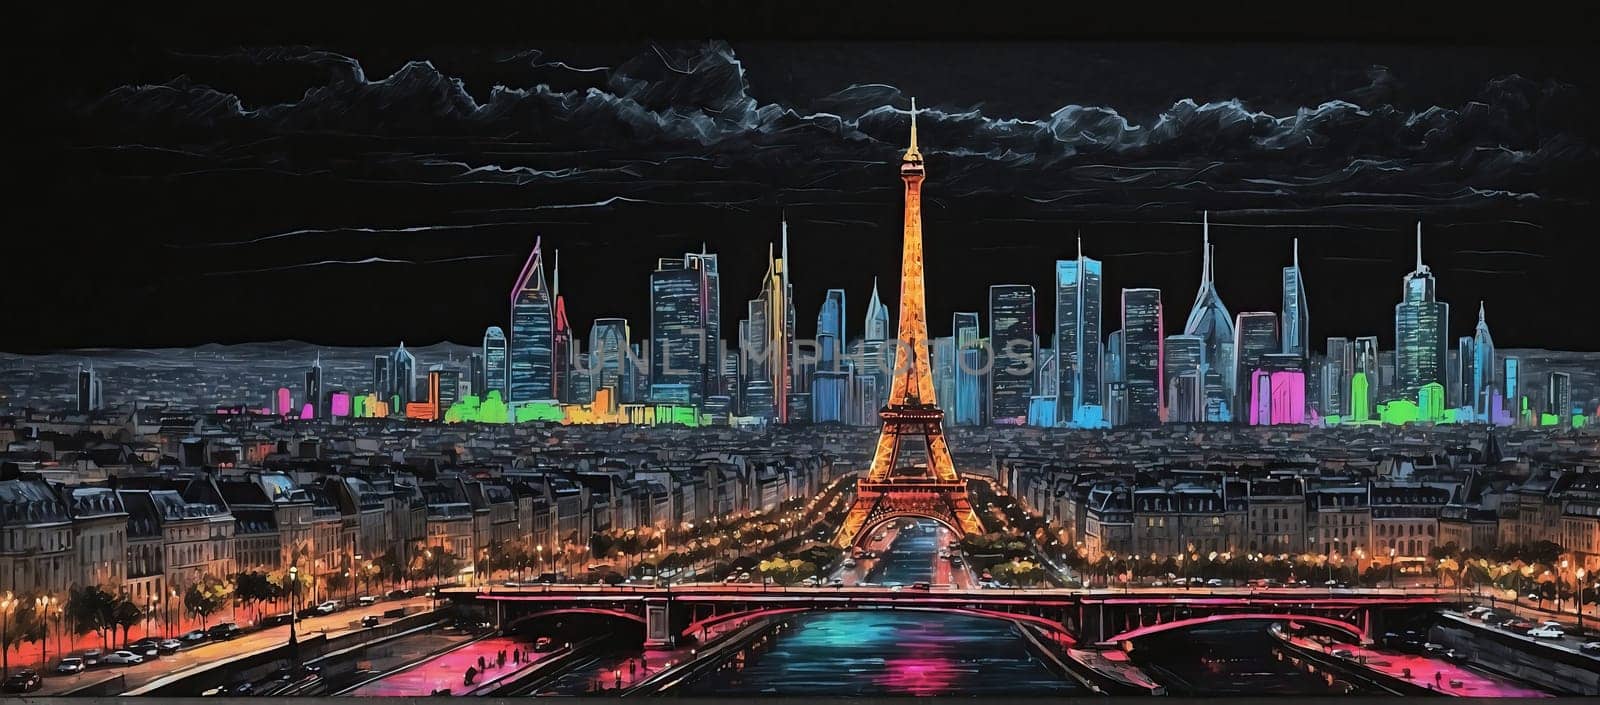 Paris in neon lights by applesstock